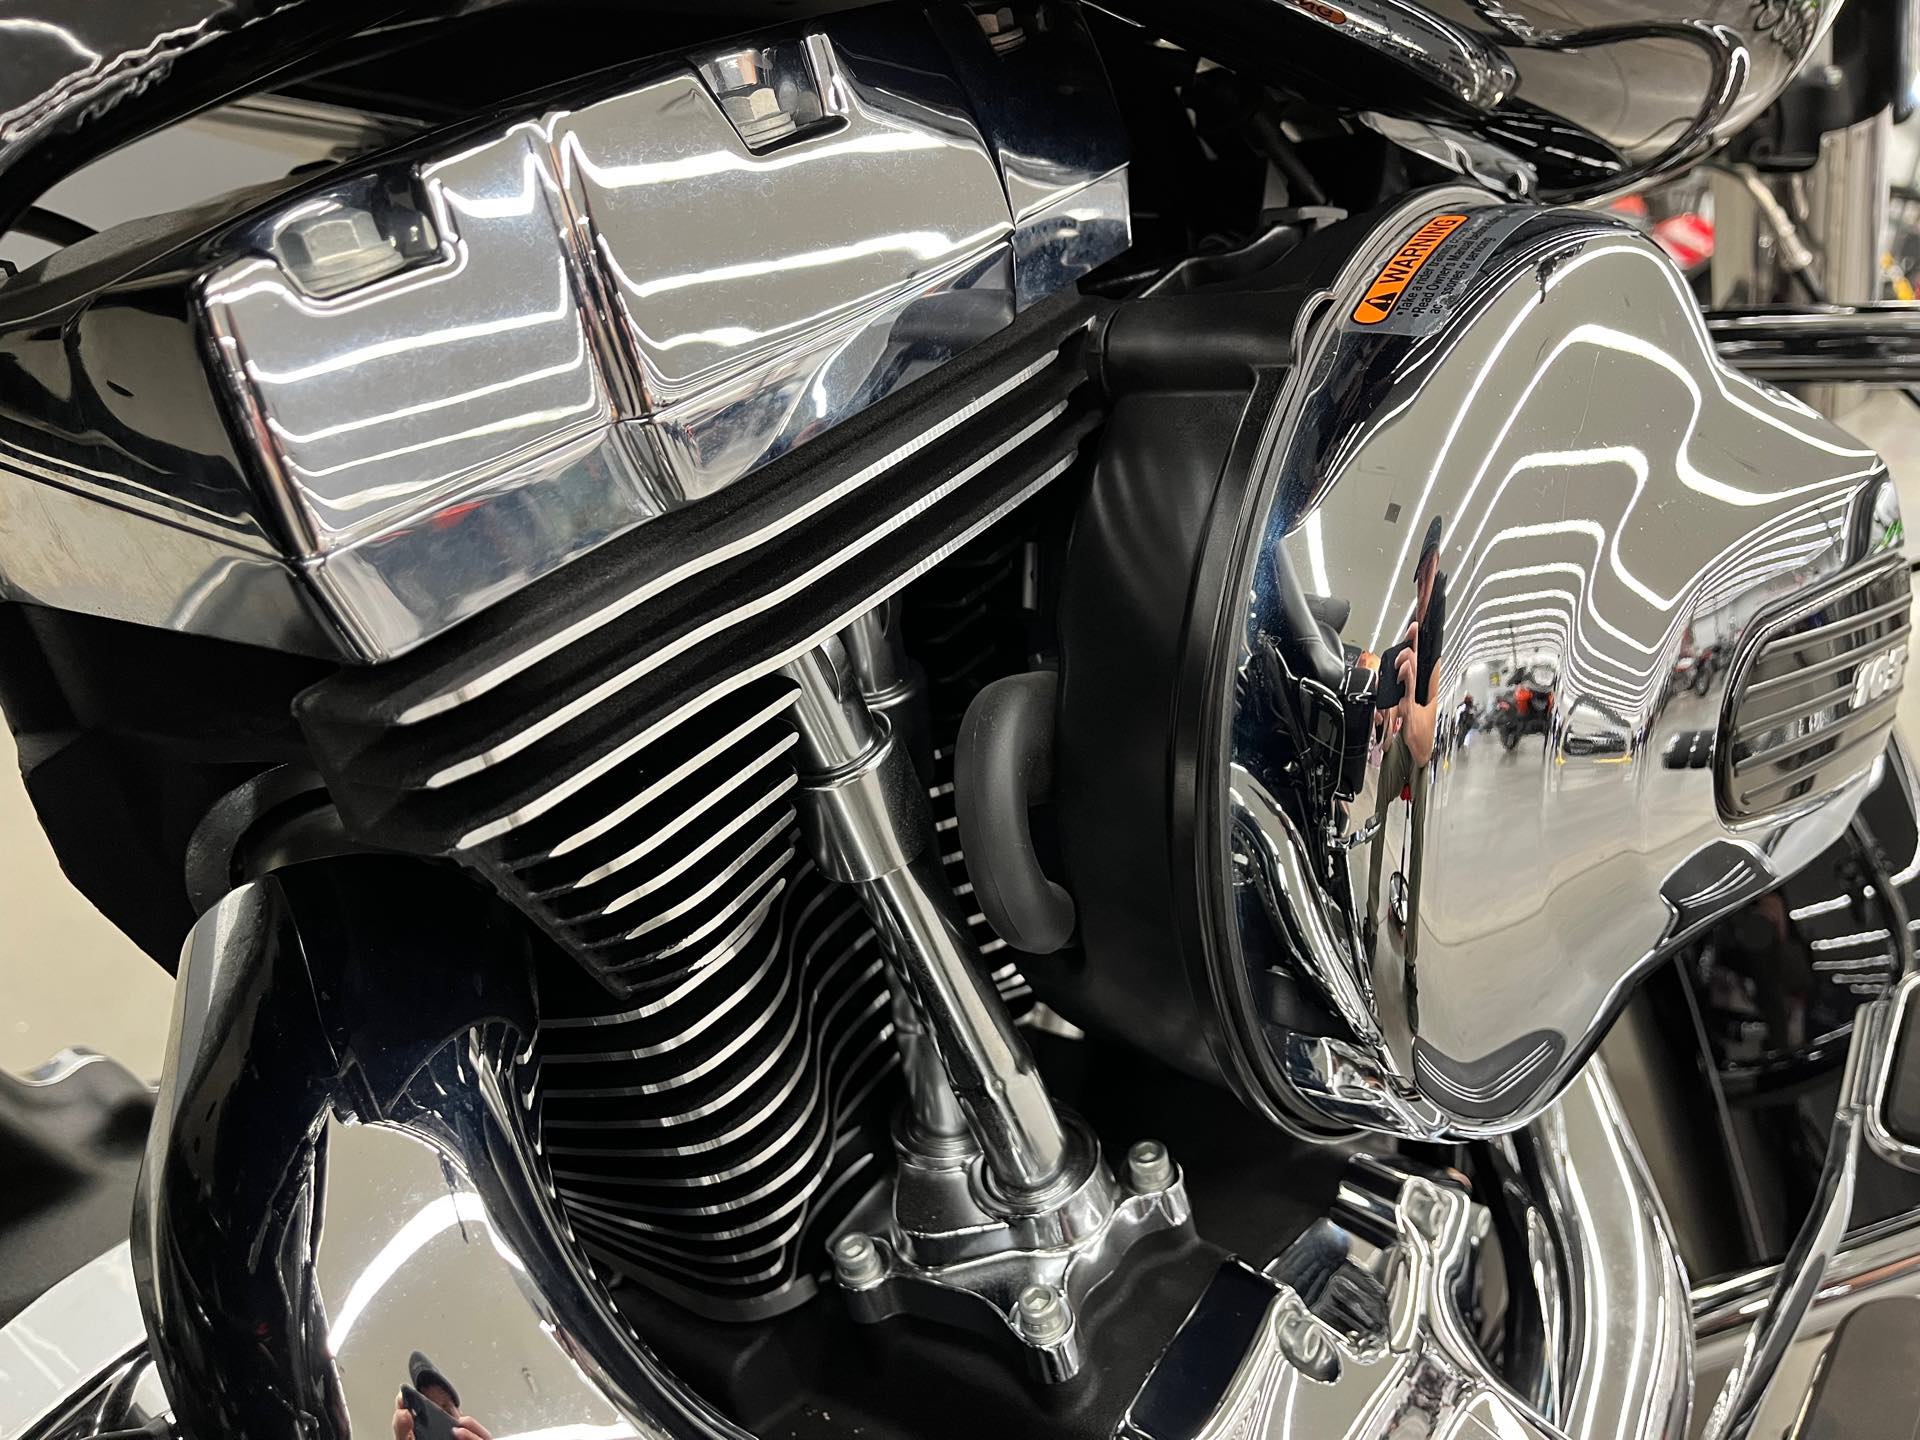 2014 Harley-Davidson Street Glide Special at Aces Motorcycles - Denver